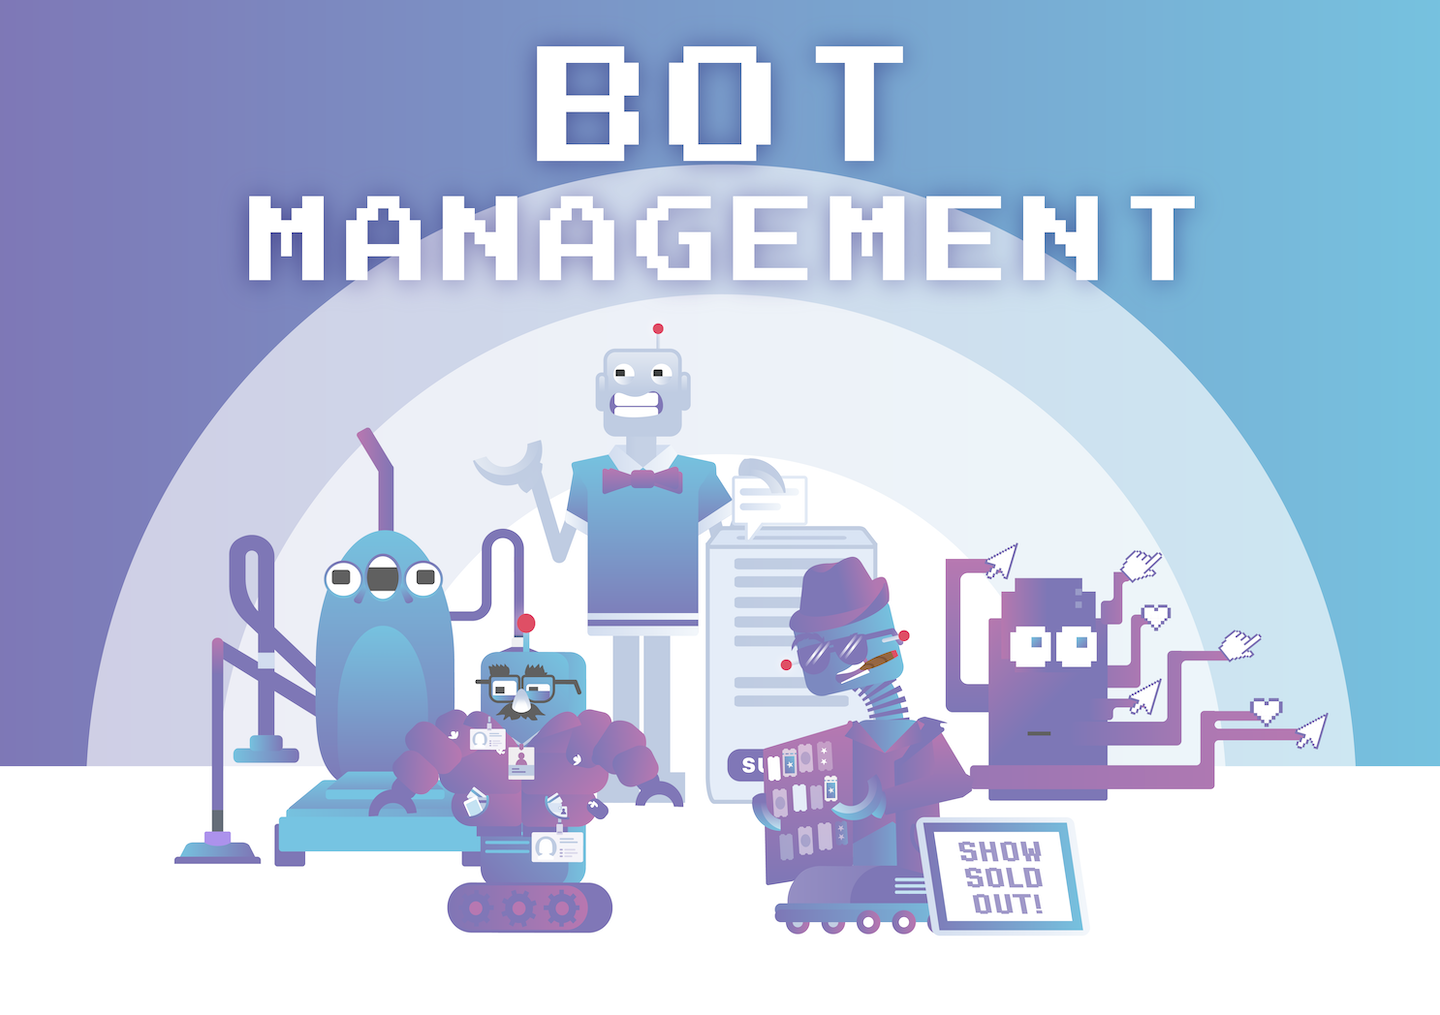 Bot management - group of bots